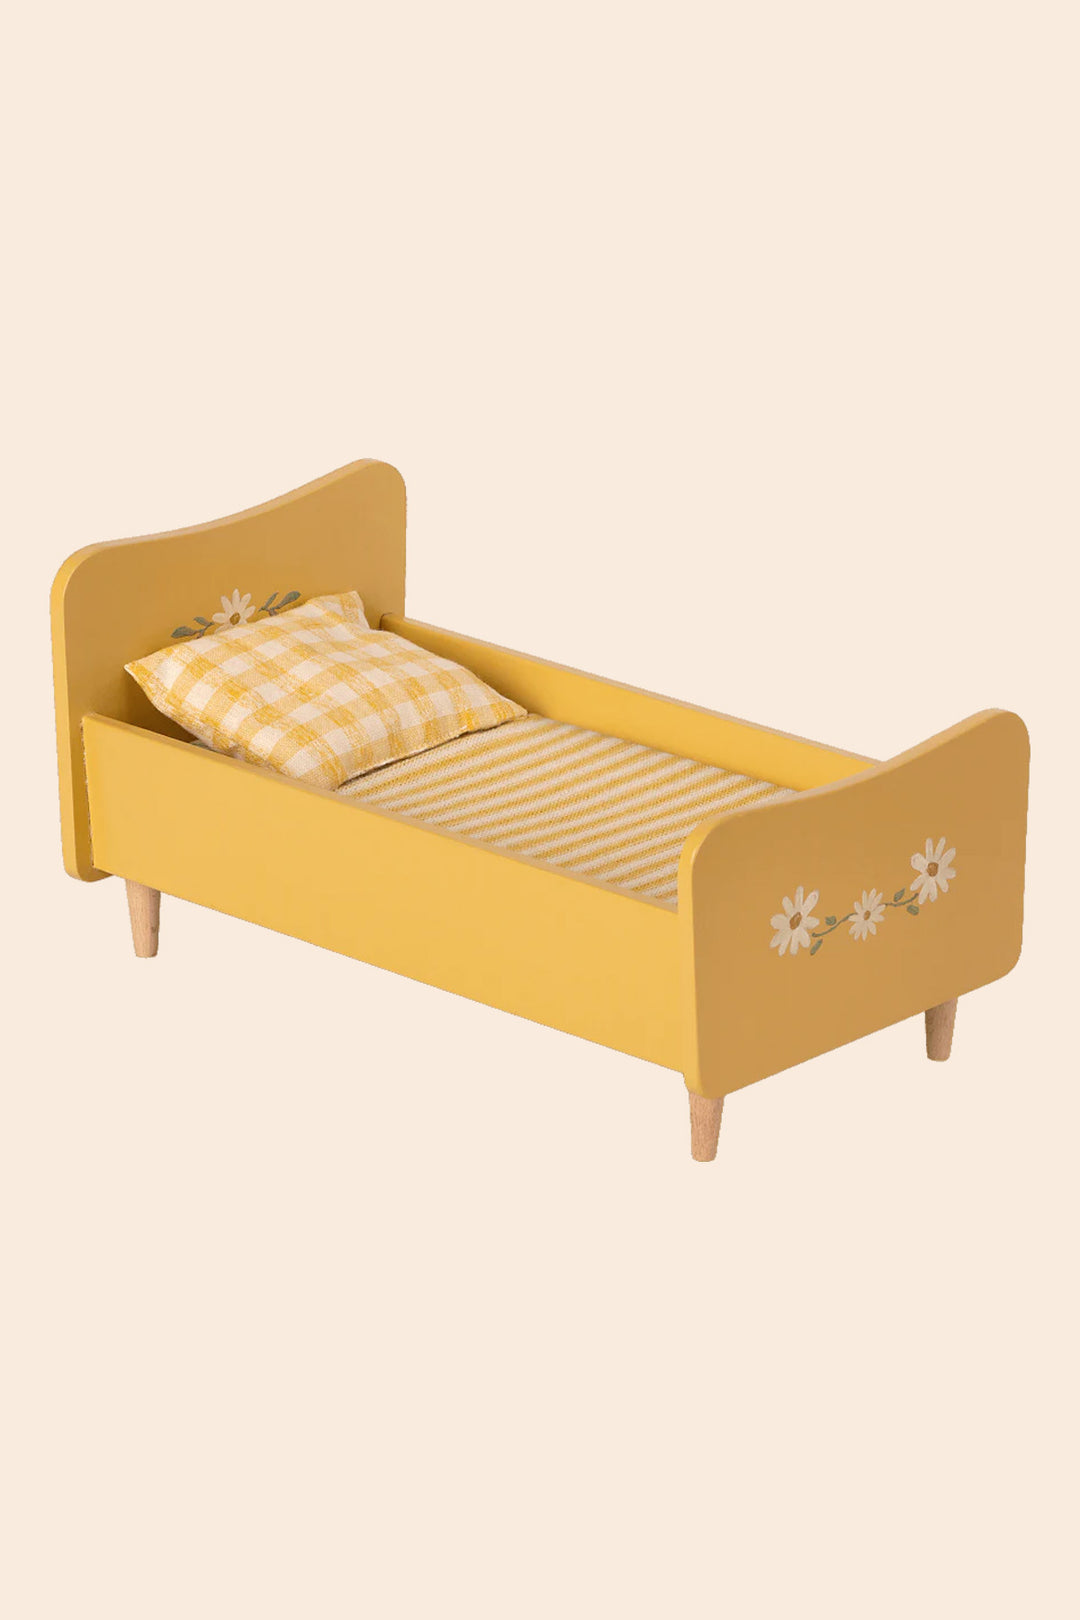 Maileg Wooden Bed, Mini-Yellow